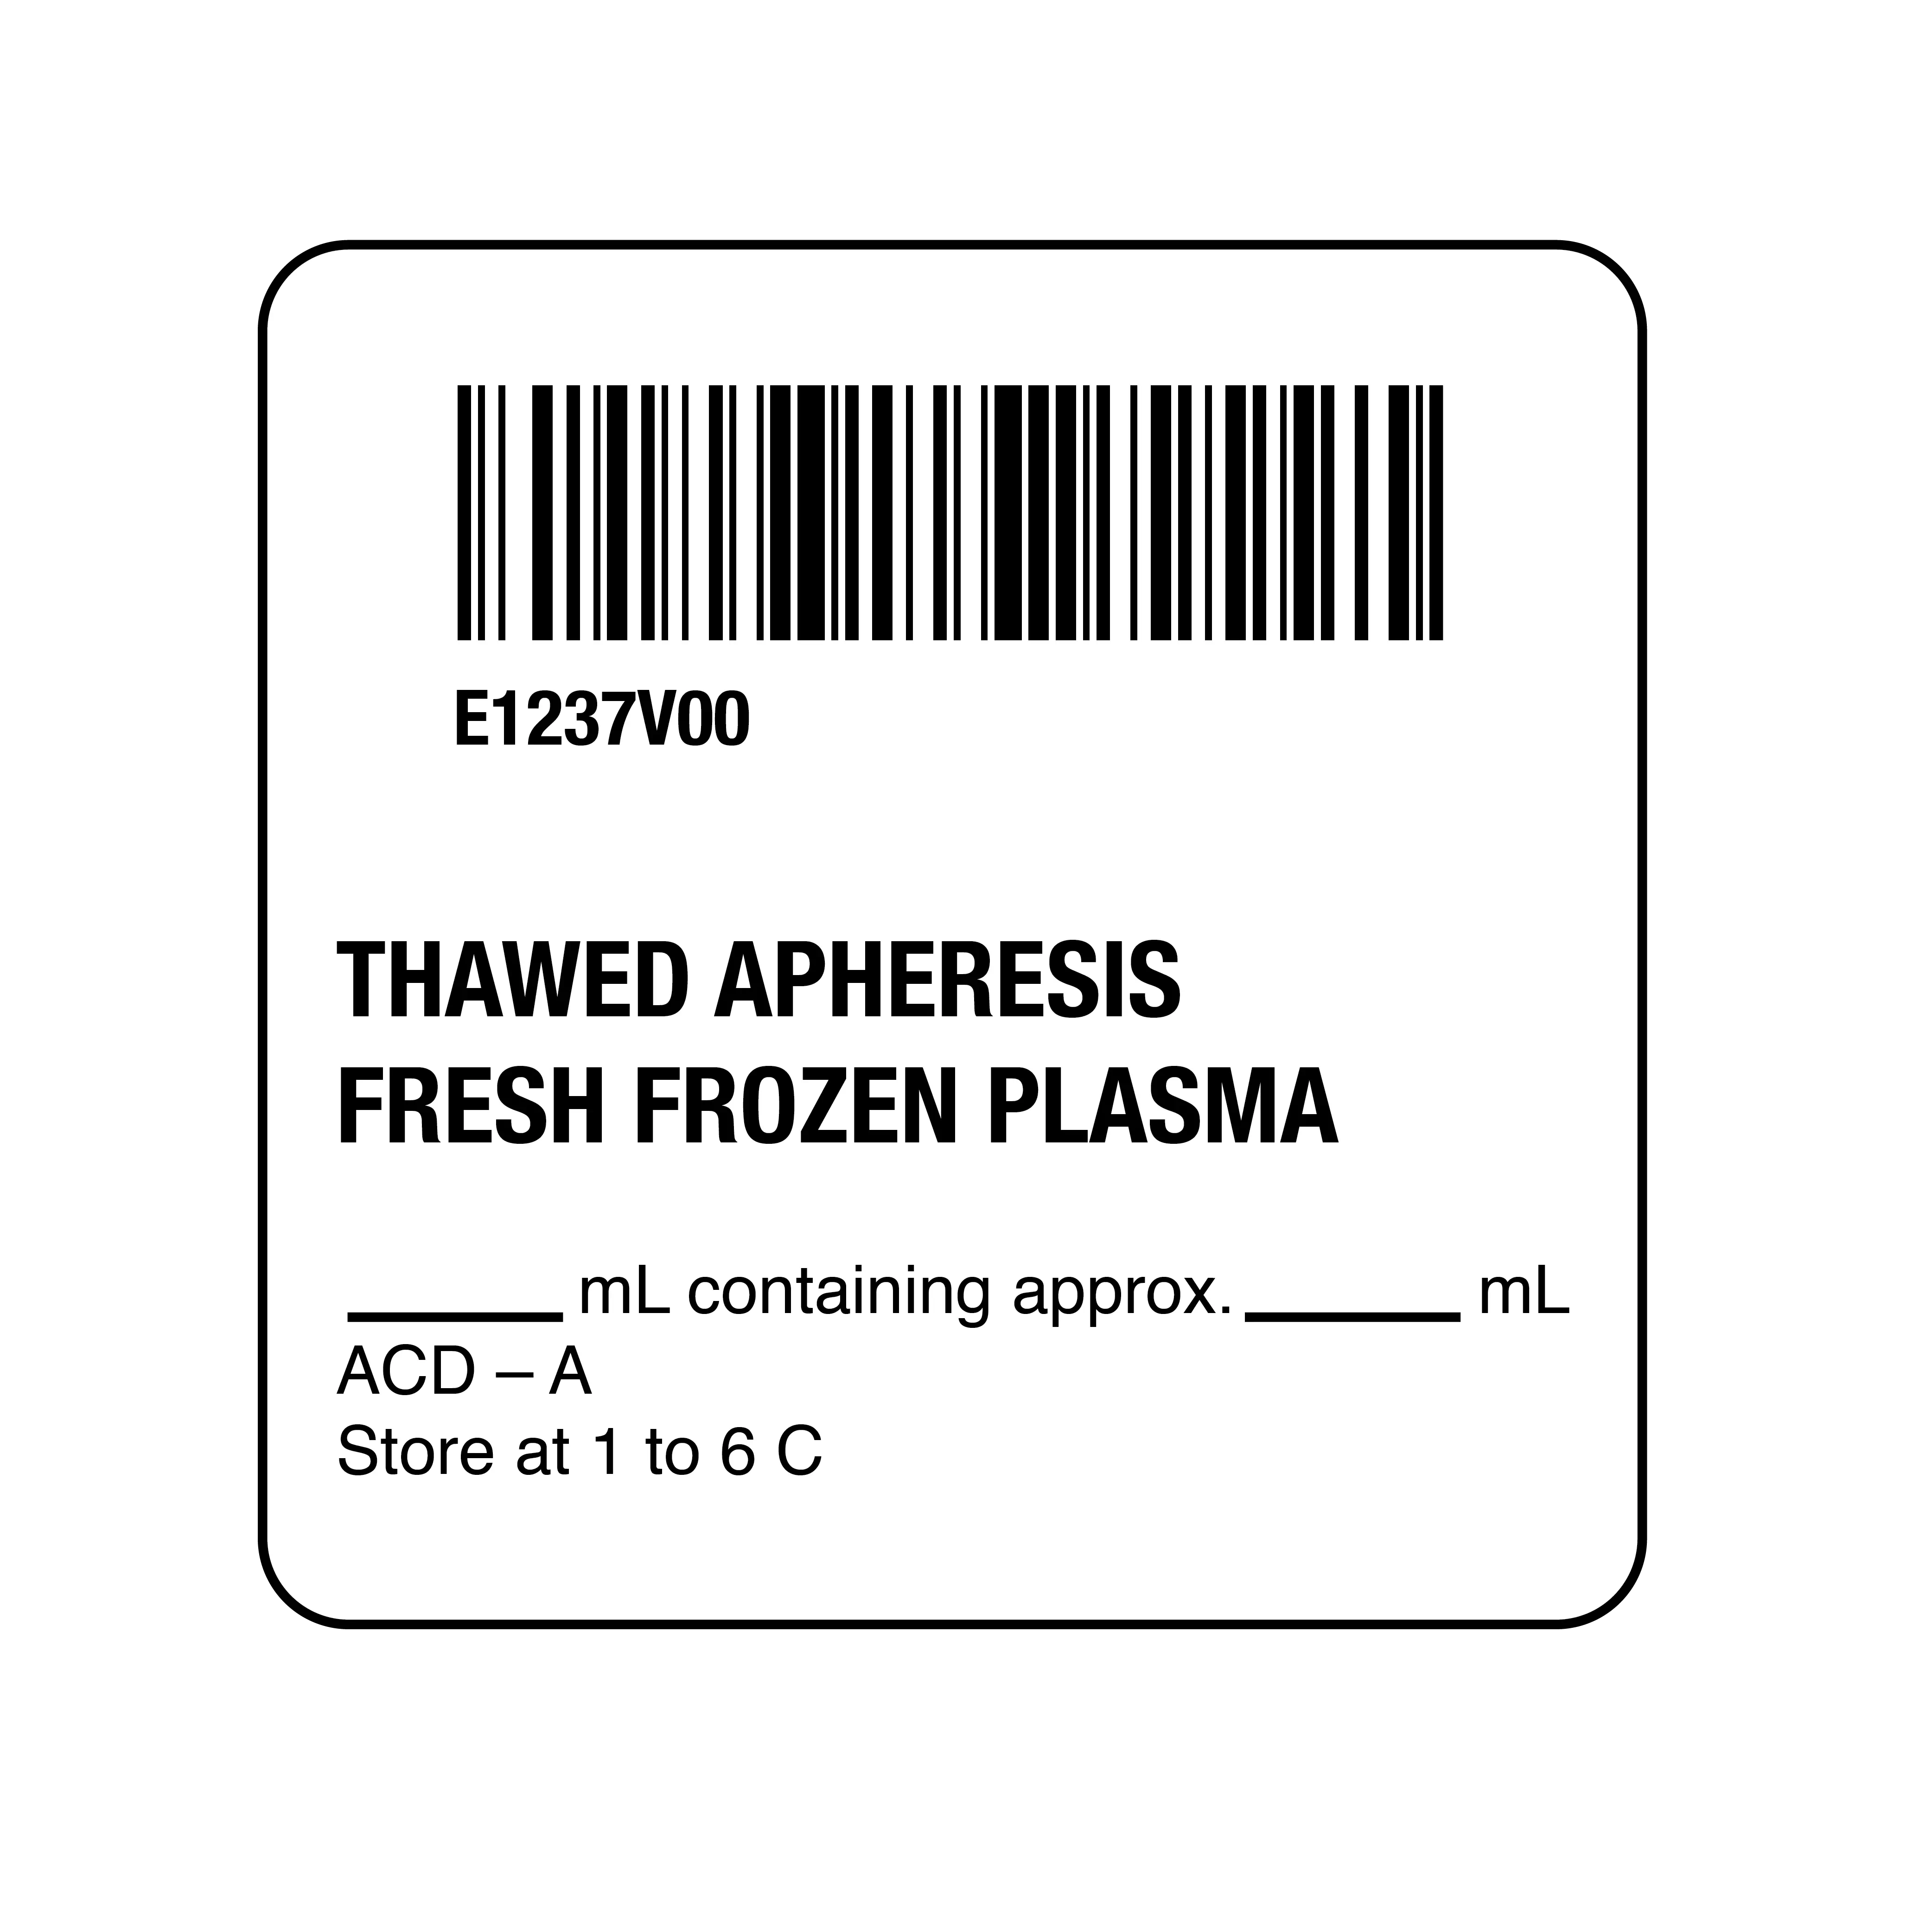 ISBT 128 Thawed Apheresis Fresh Frozen Plasma